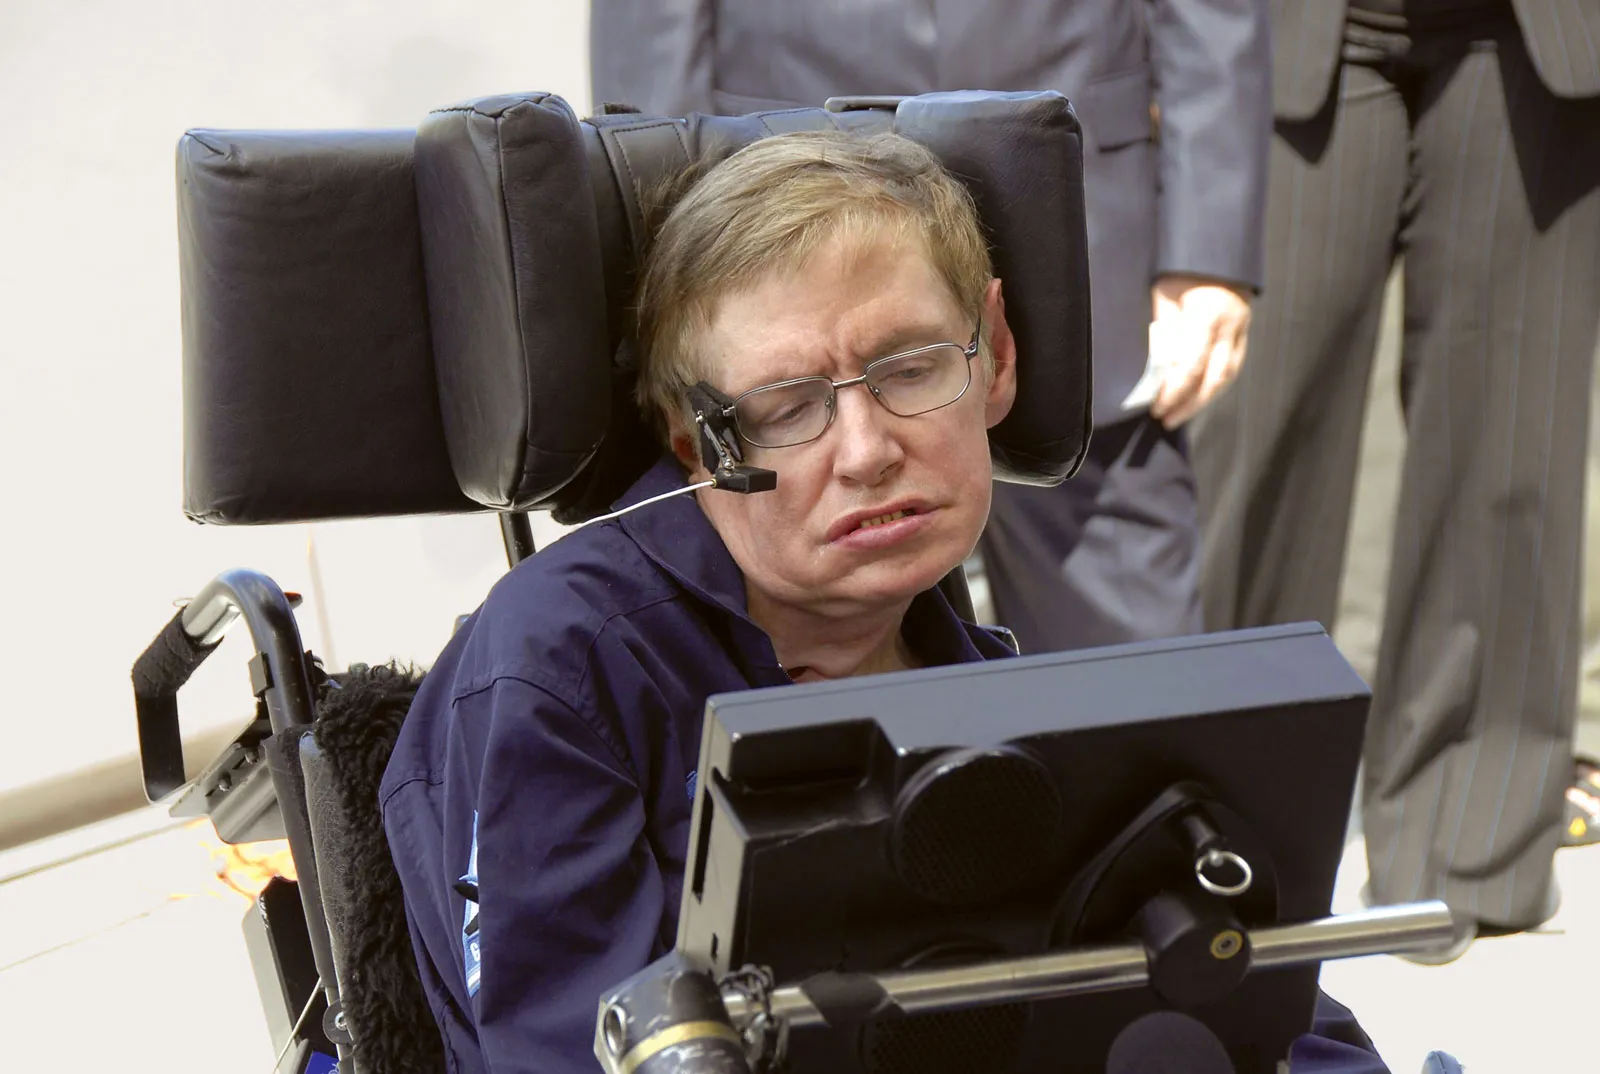 Stephen Hawking’s cultural heritage transcends barriers